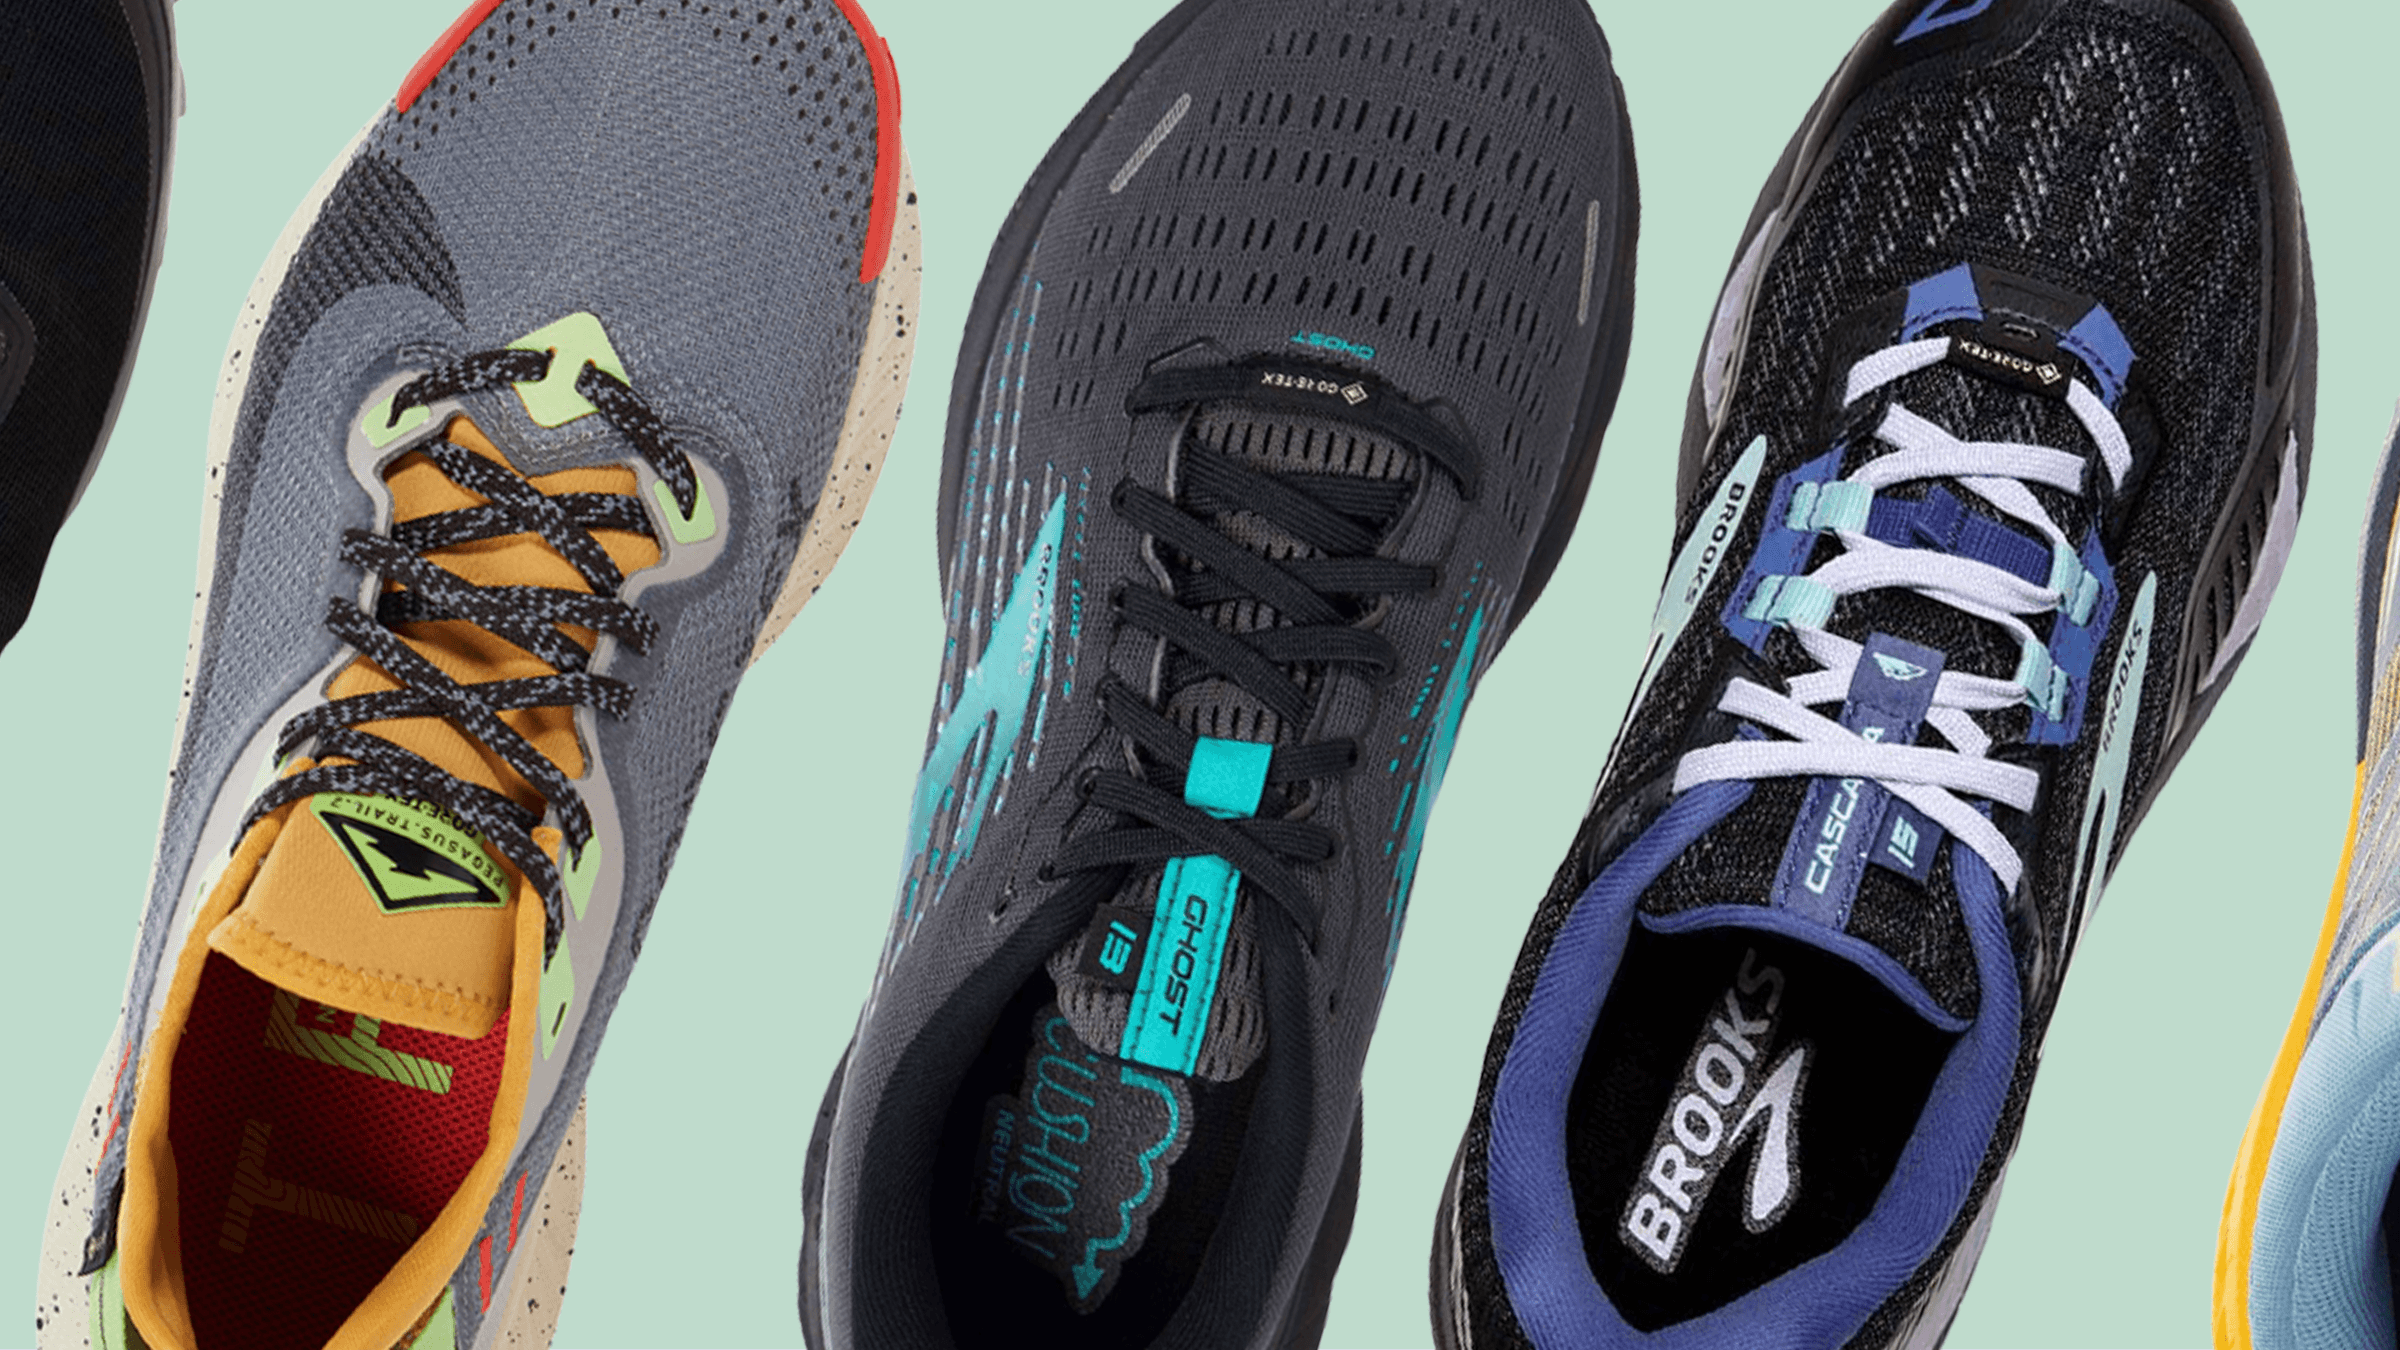 7 Best Waterproof Running Shoes For Women in 2022